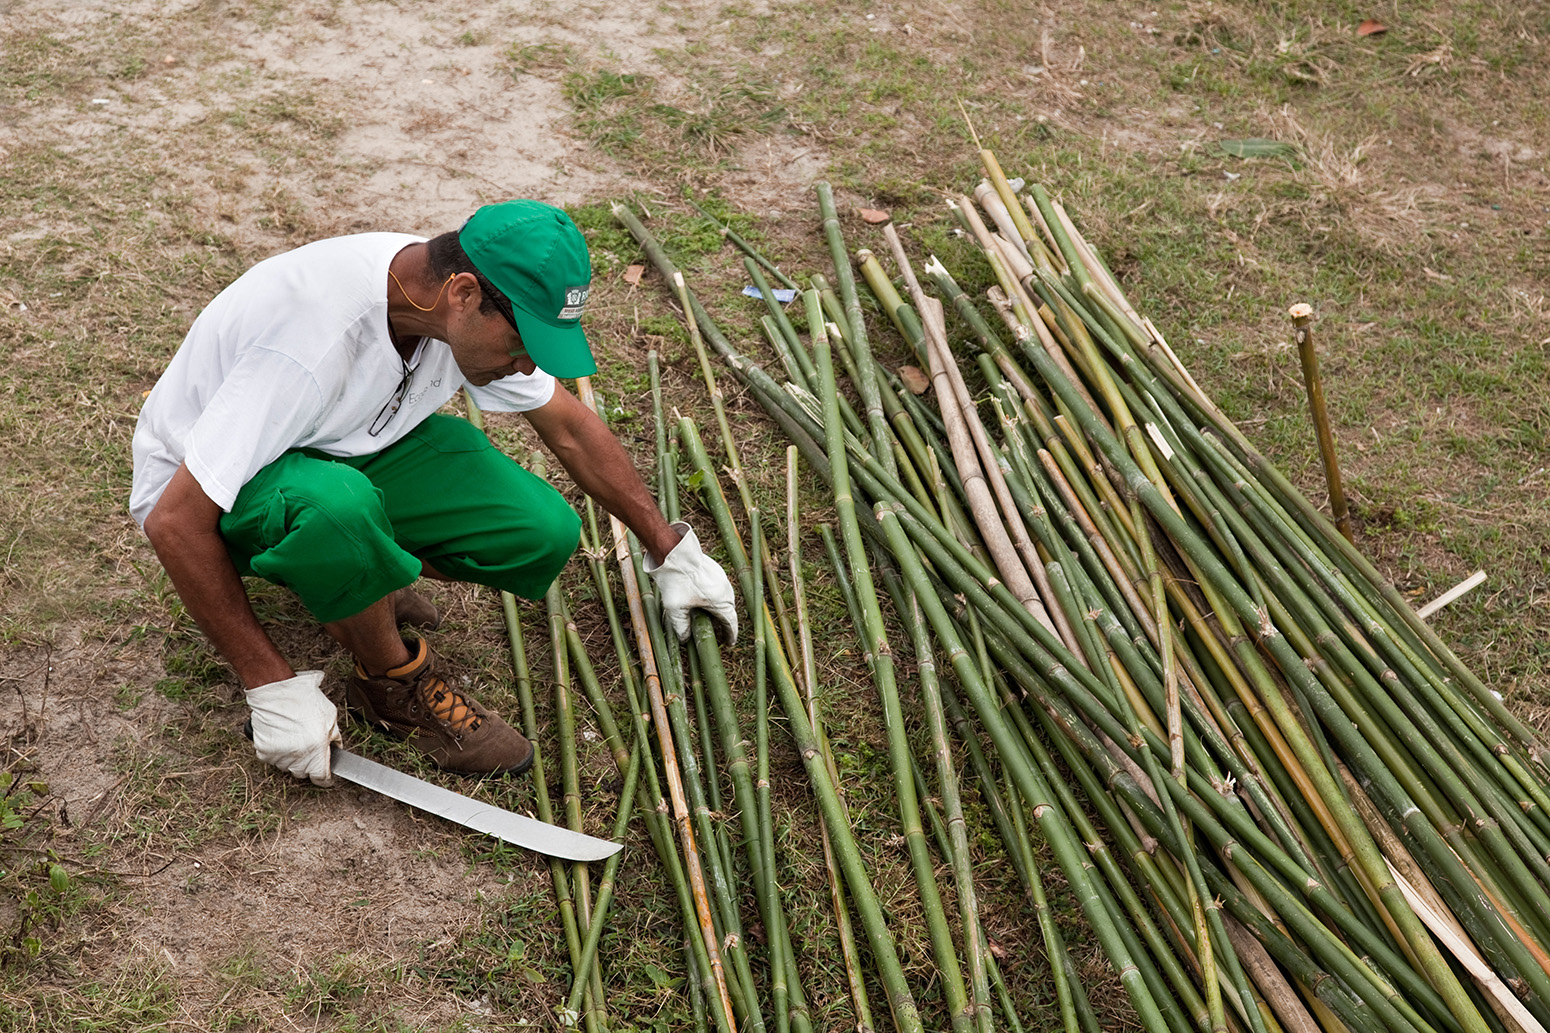 BYC1HC Man working with Cane / Bamboo, Rio de Janeiro, Brazil, South America.